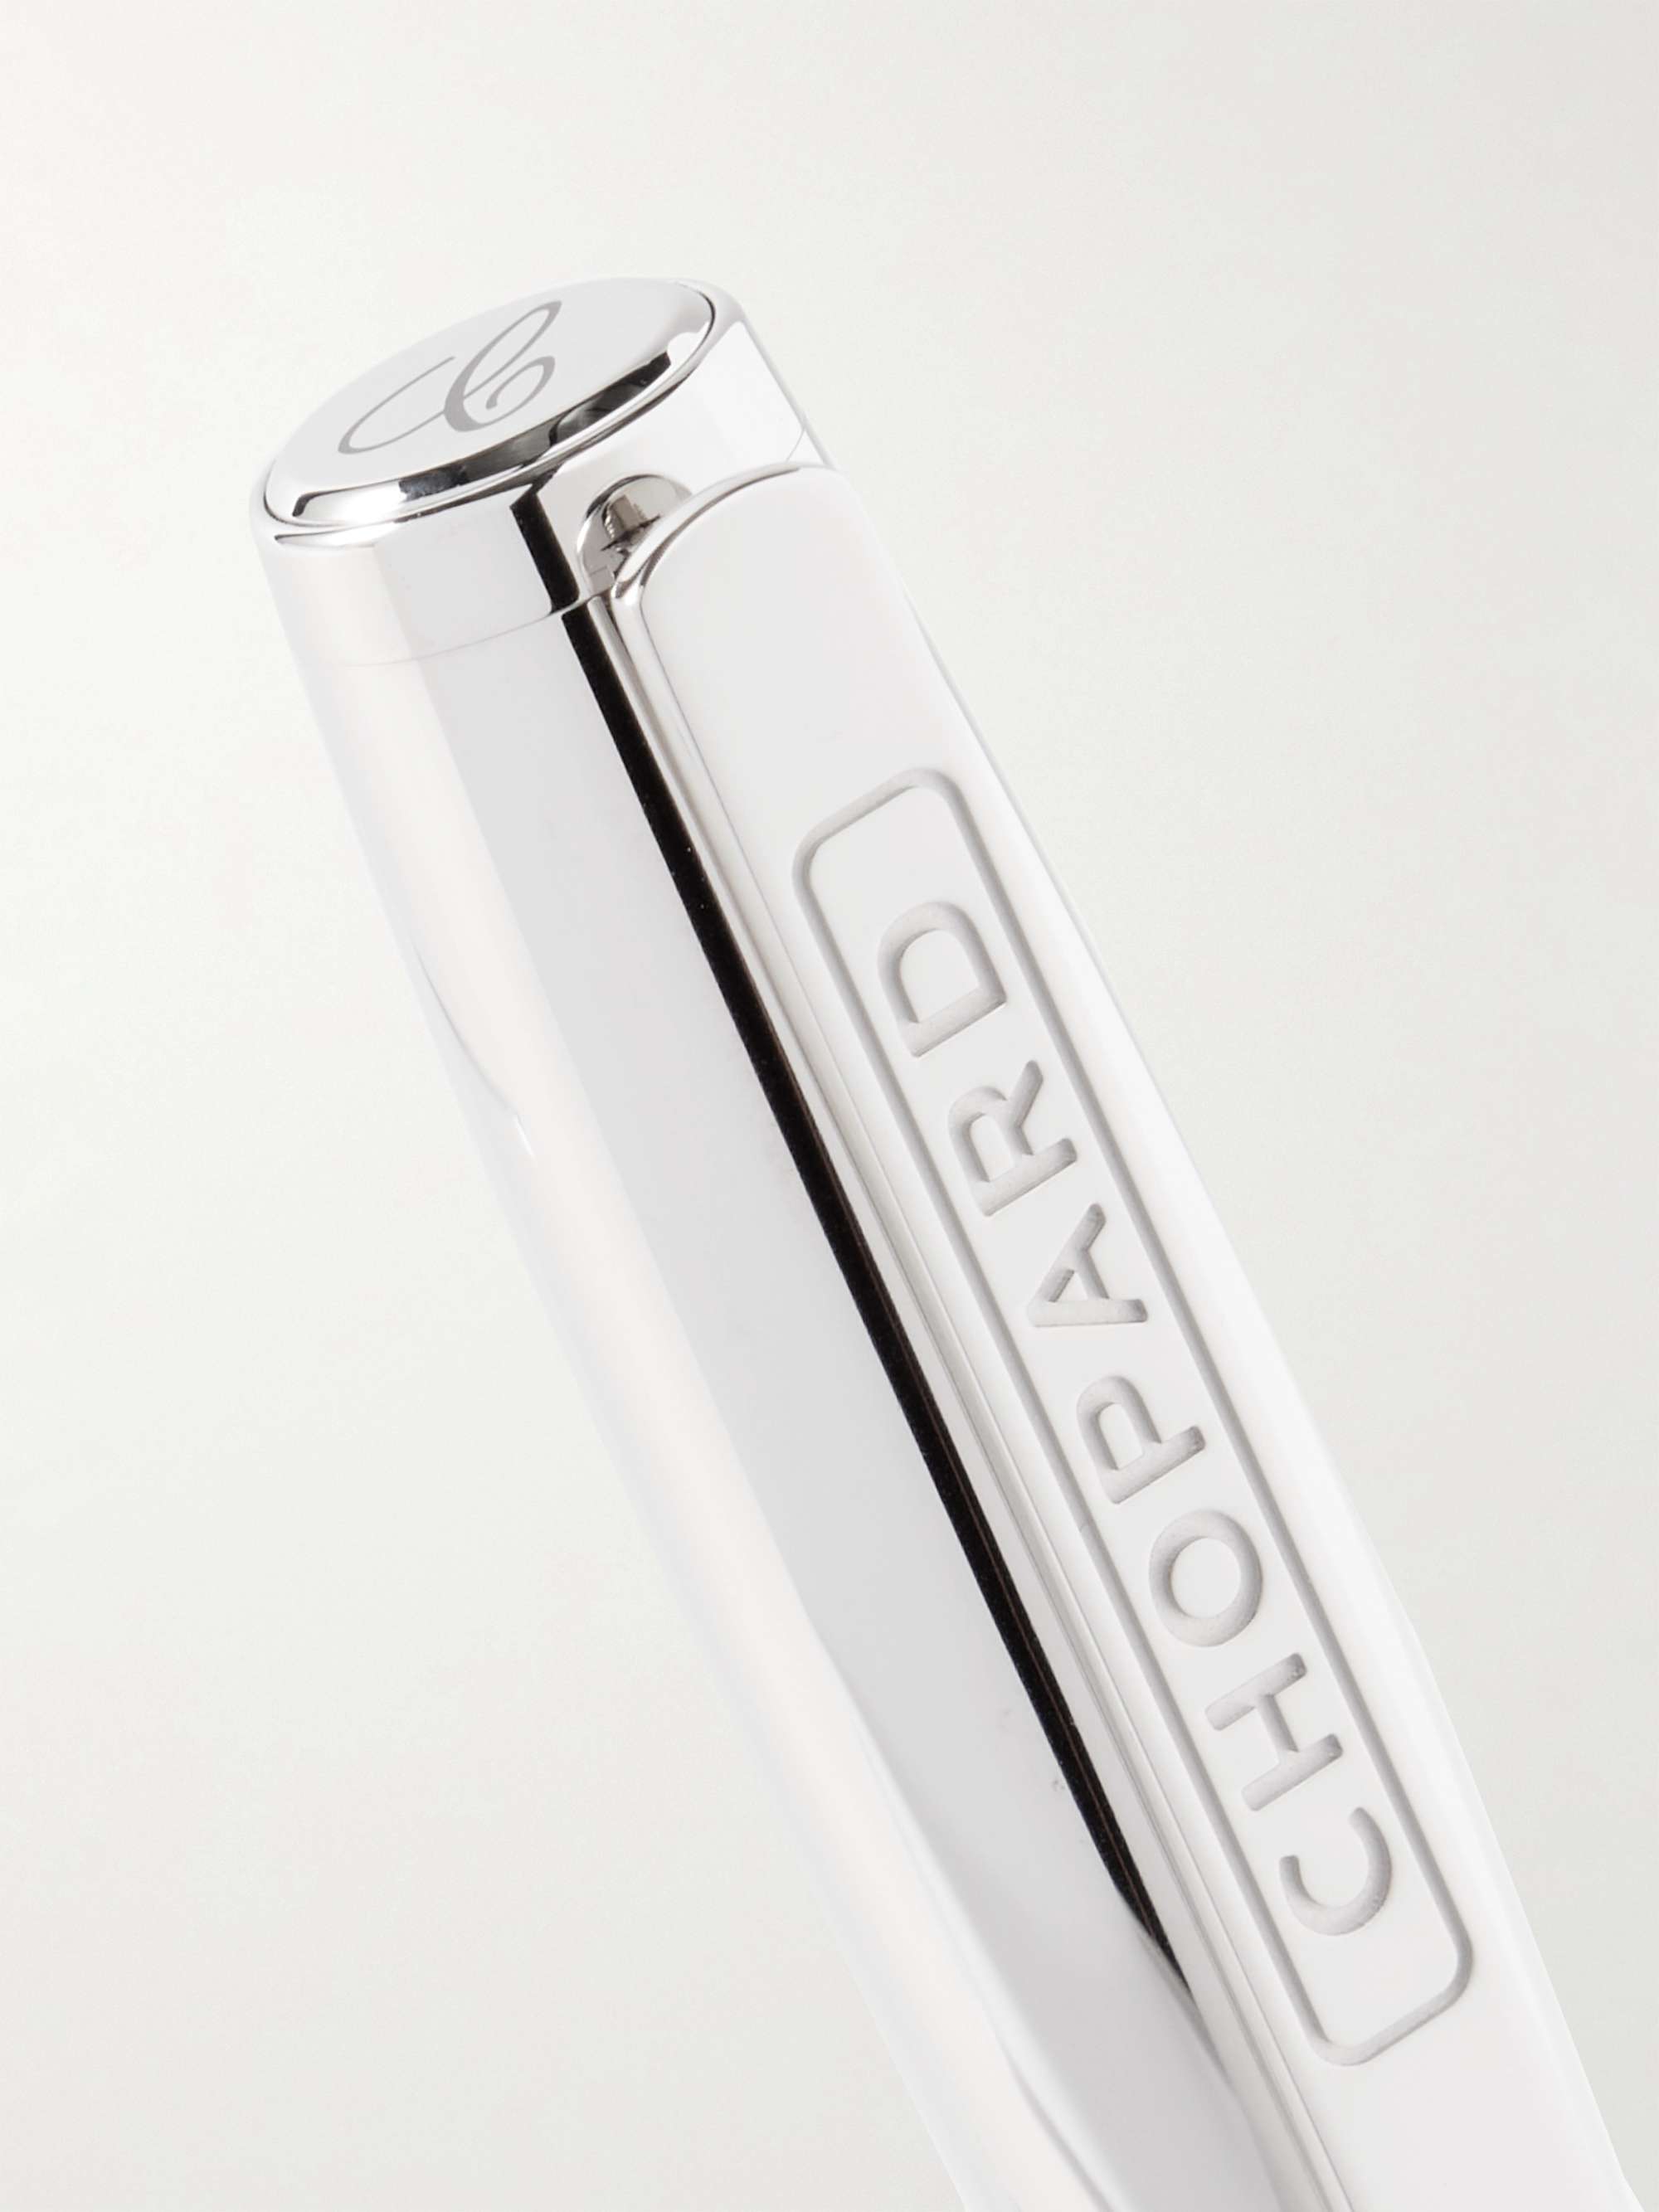 CHOPARD Brescia Carbon Fibre and Palladium Ballpoint Pen